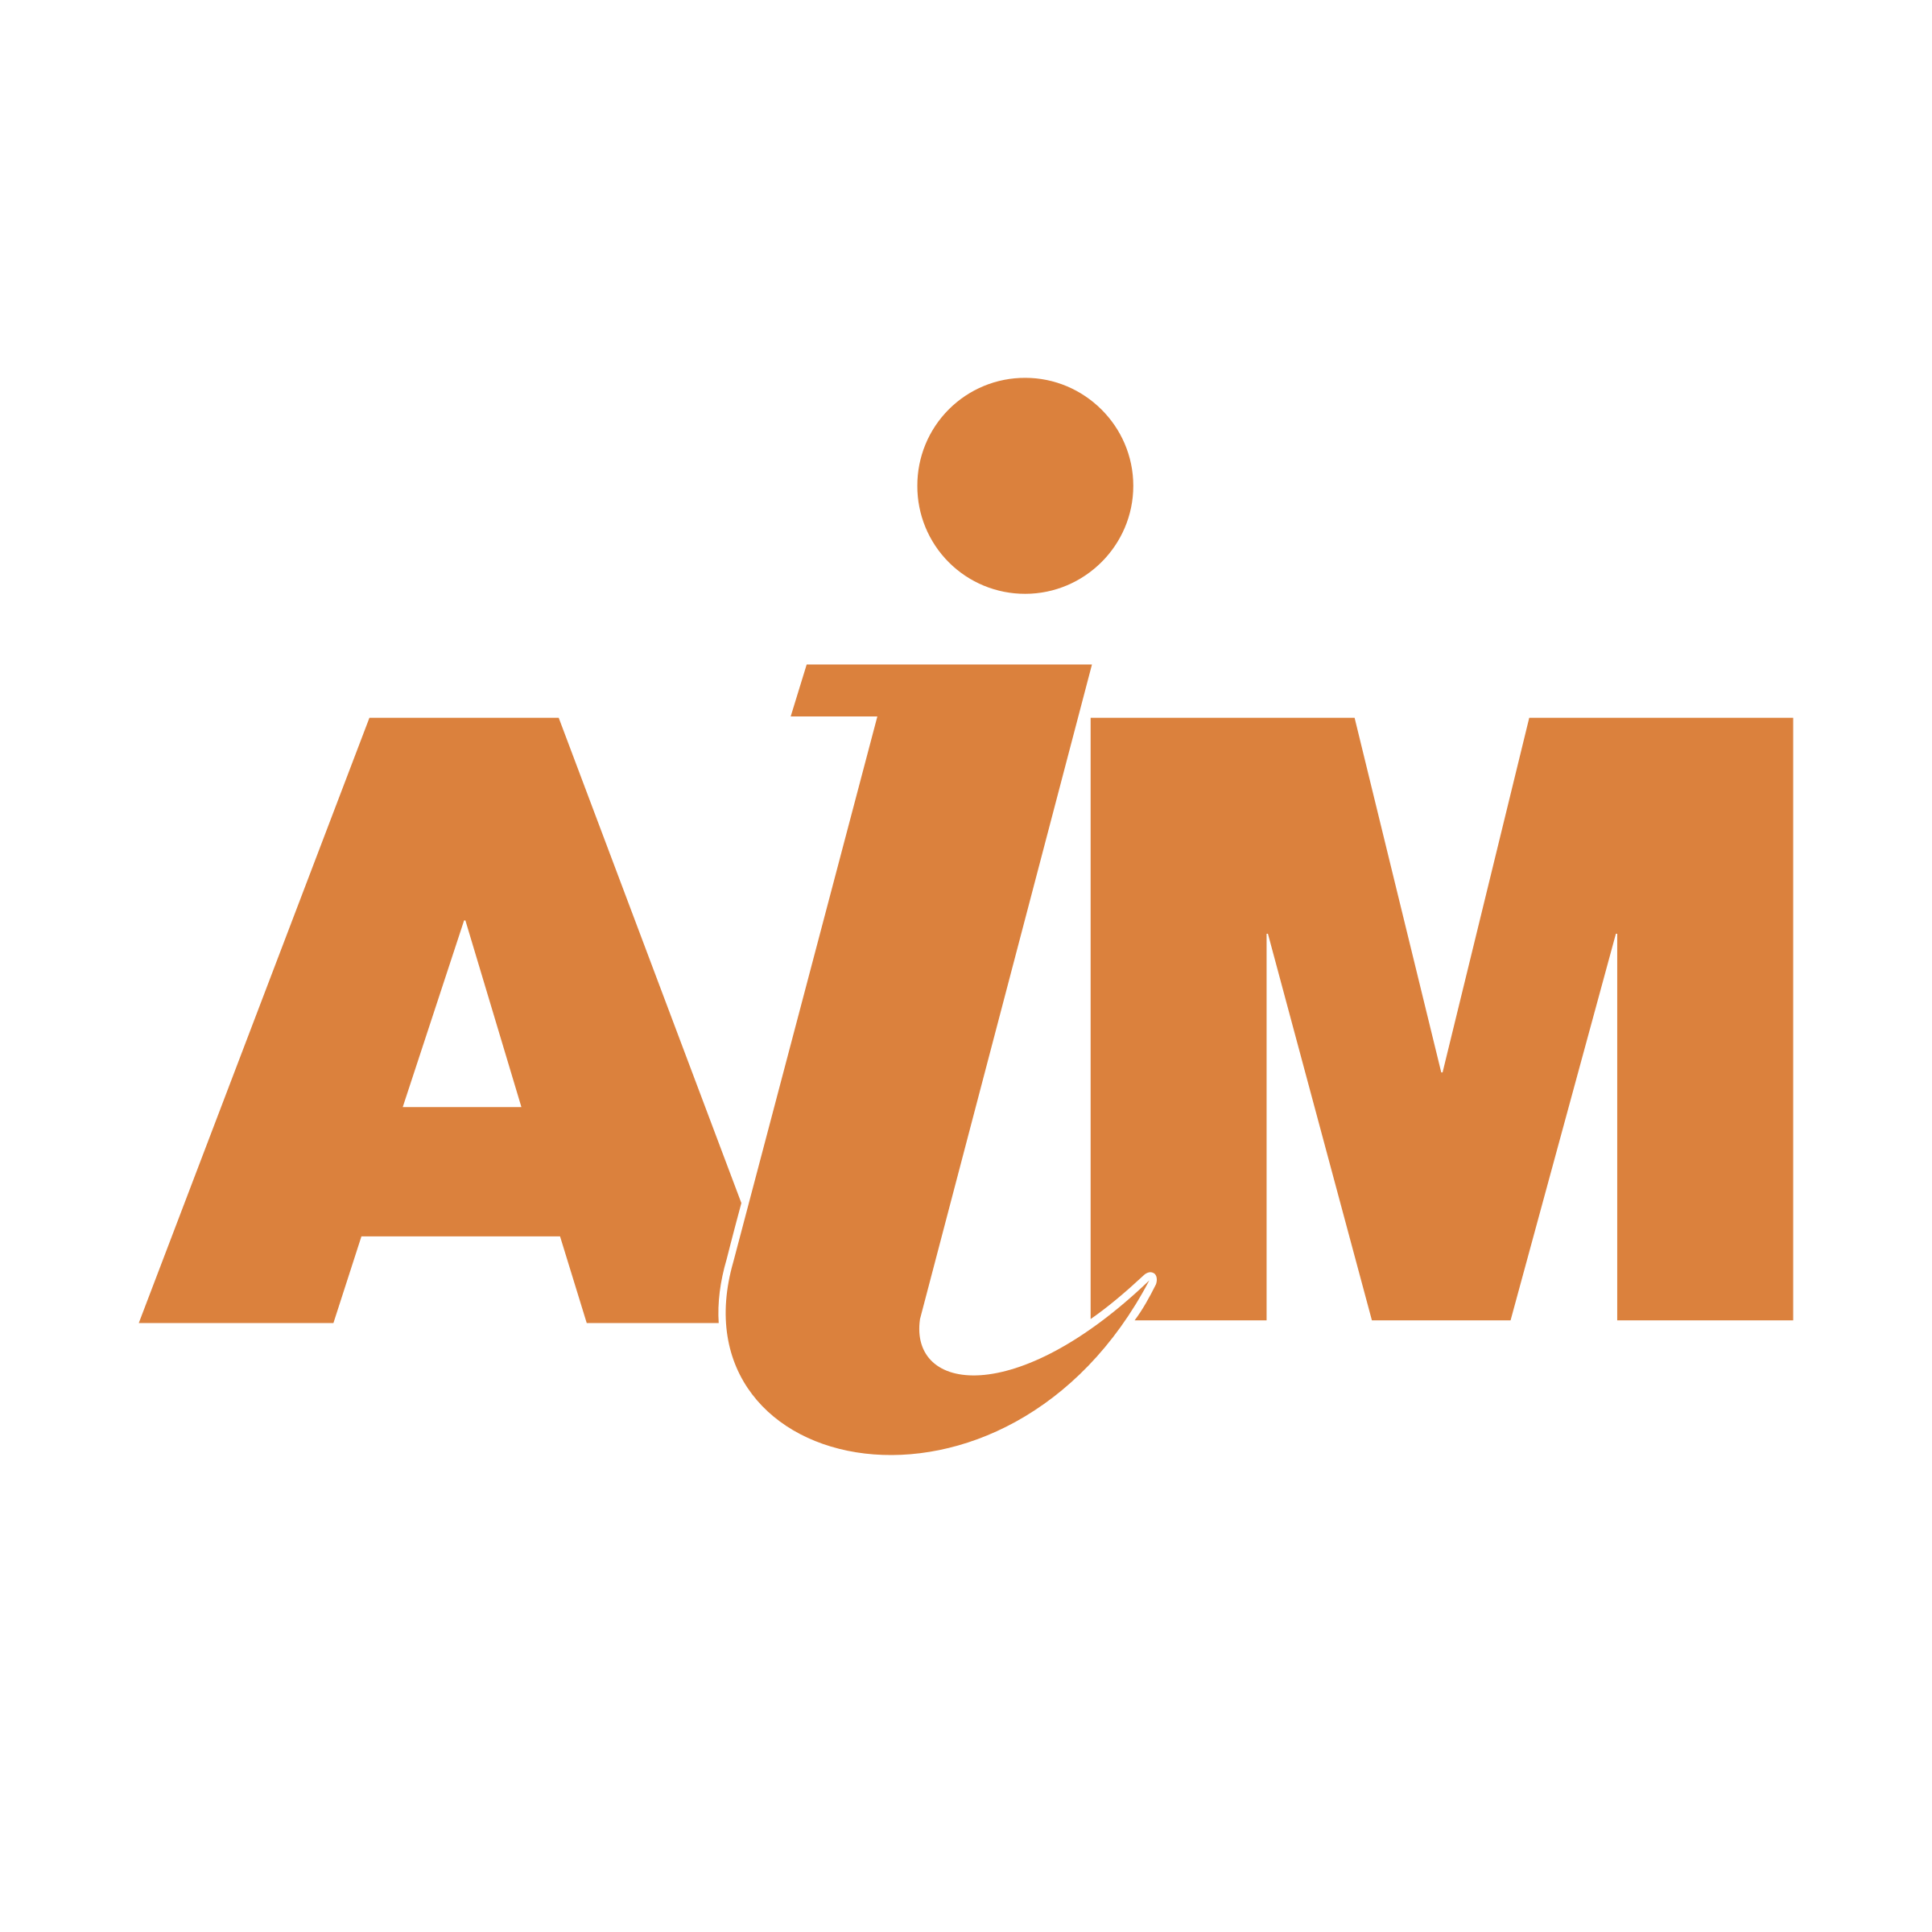 Aim Logo - AIM 04 Logo PNG Transparent & SVG Vector - Freebie Supply